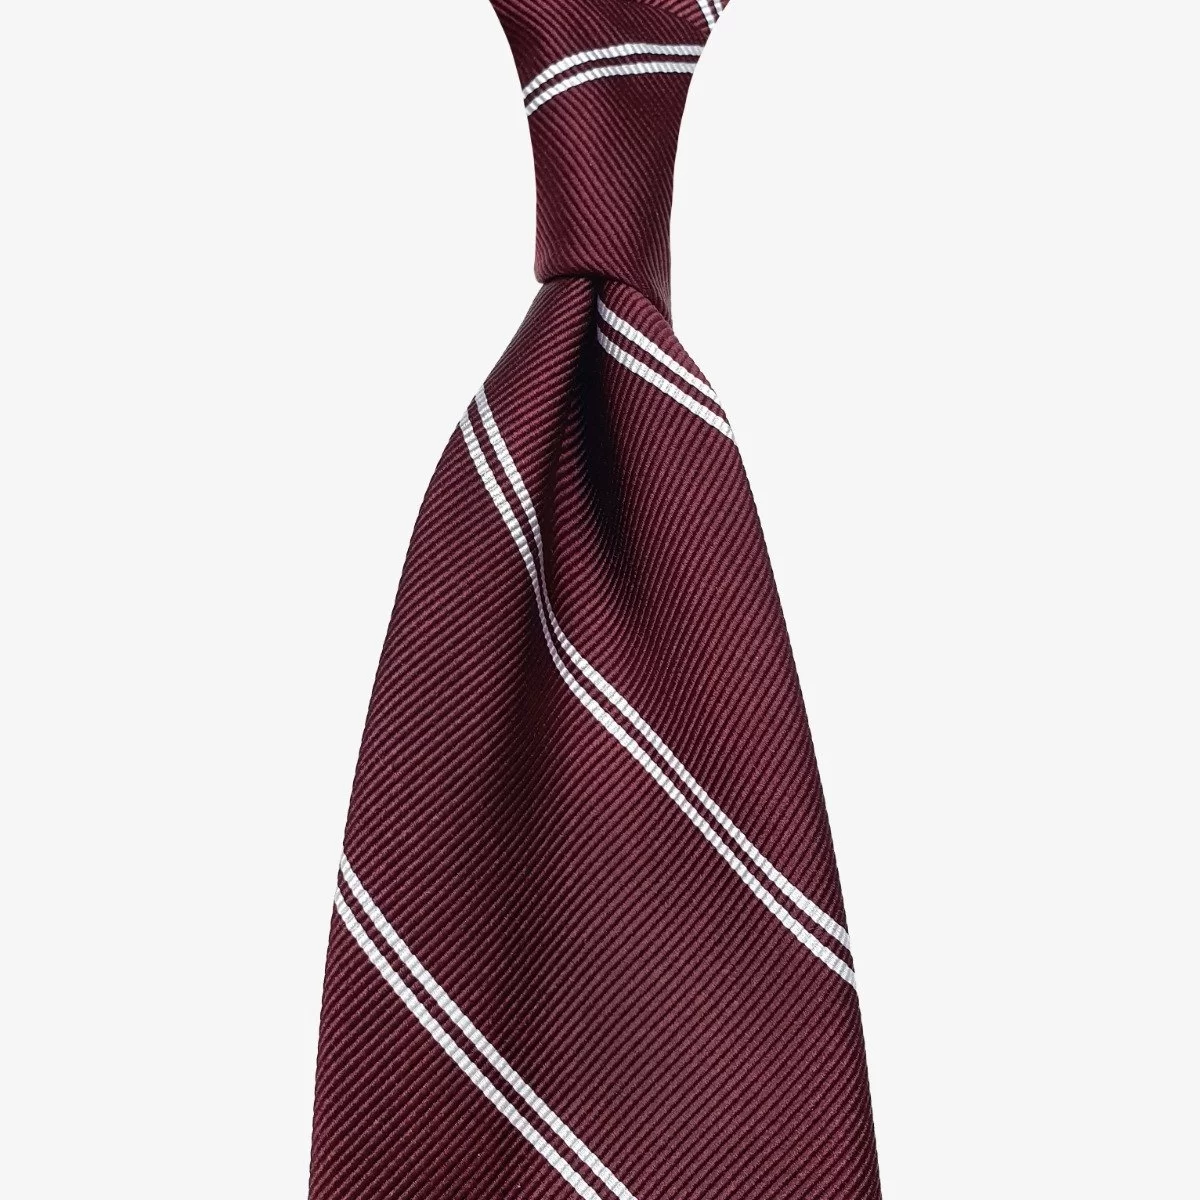 Shibumi Firenze burgundy repp striped silk tie with white stripes